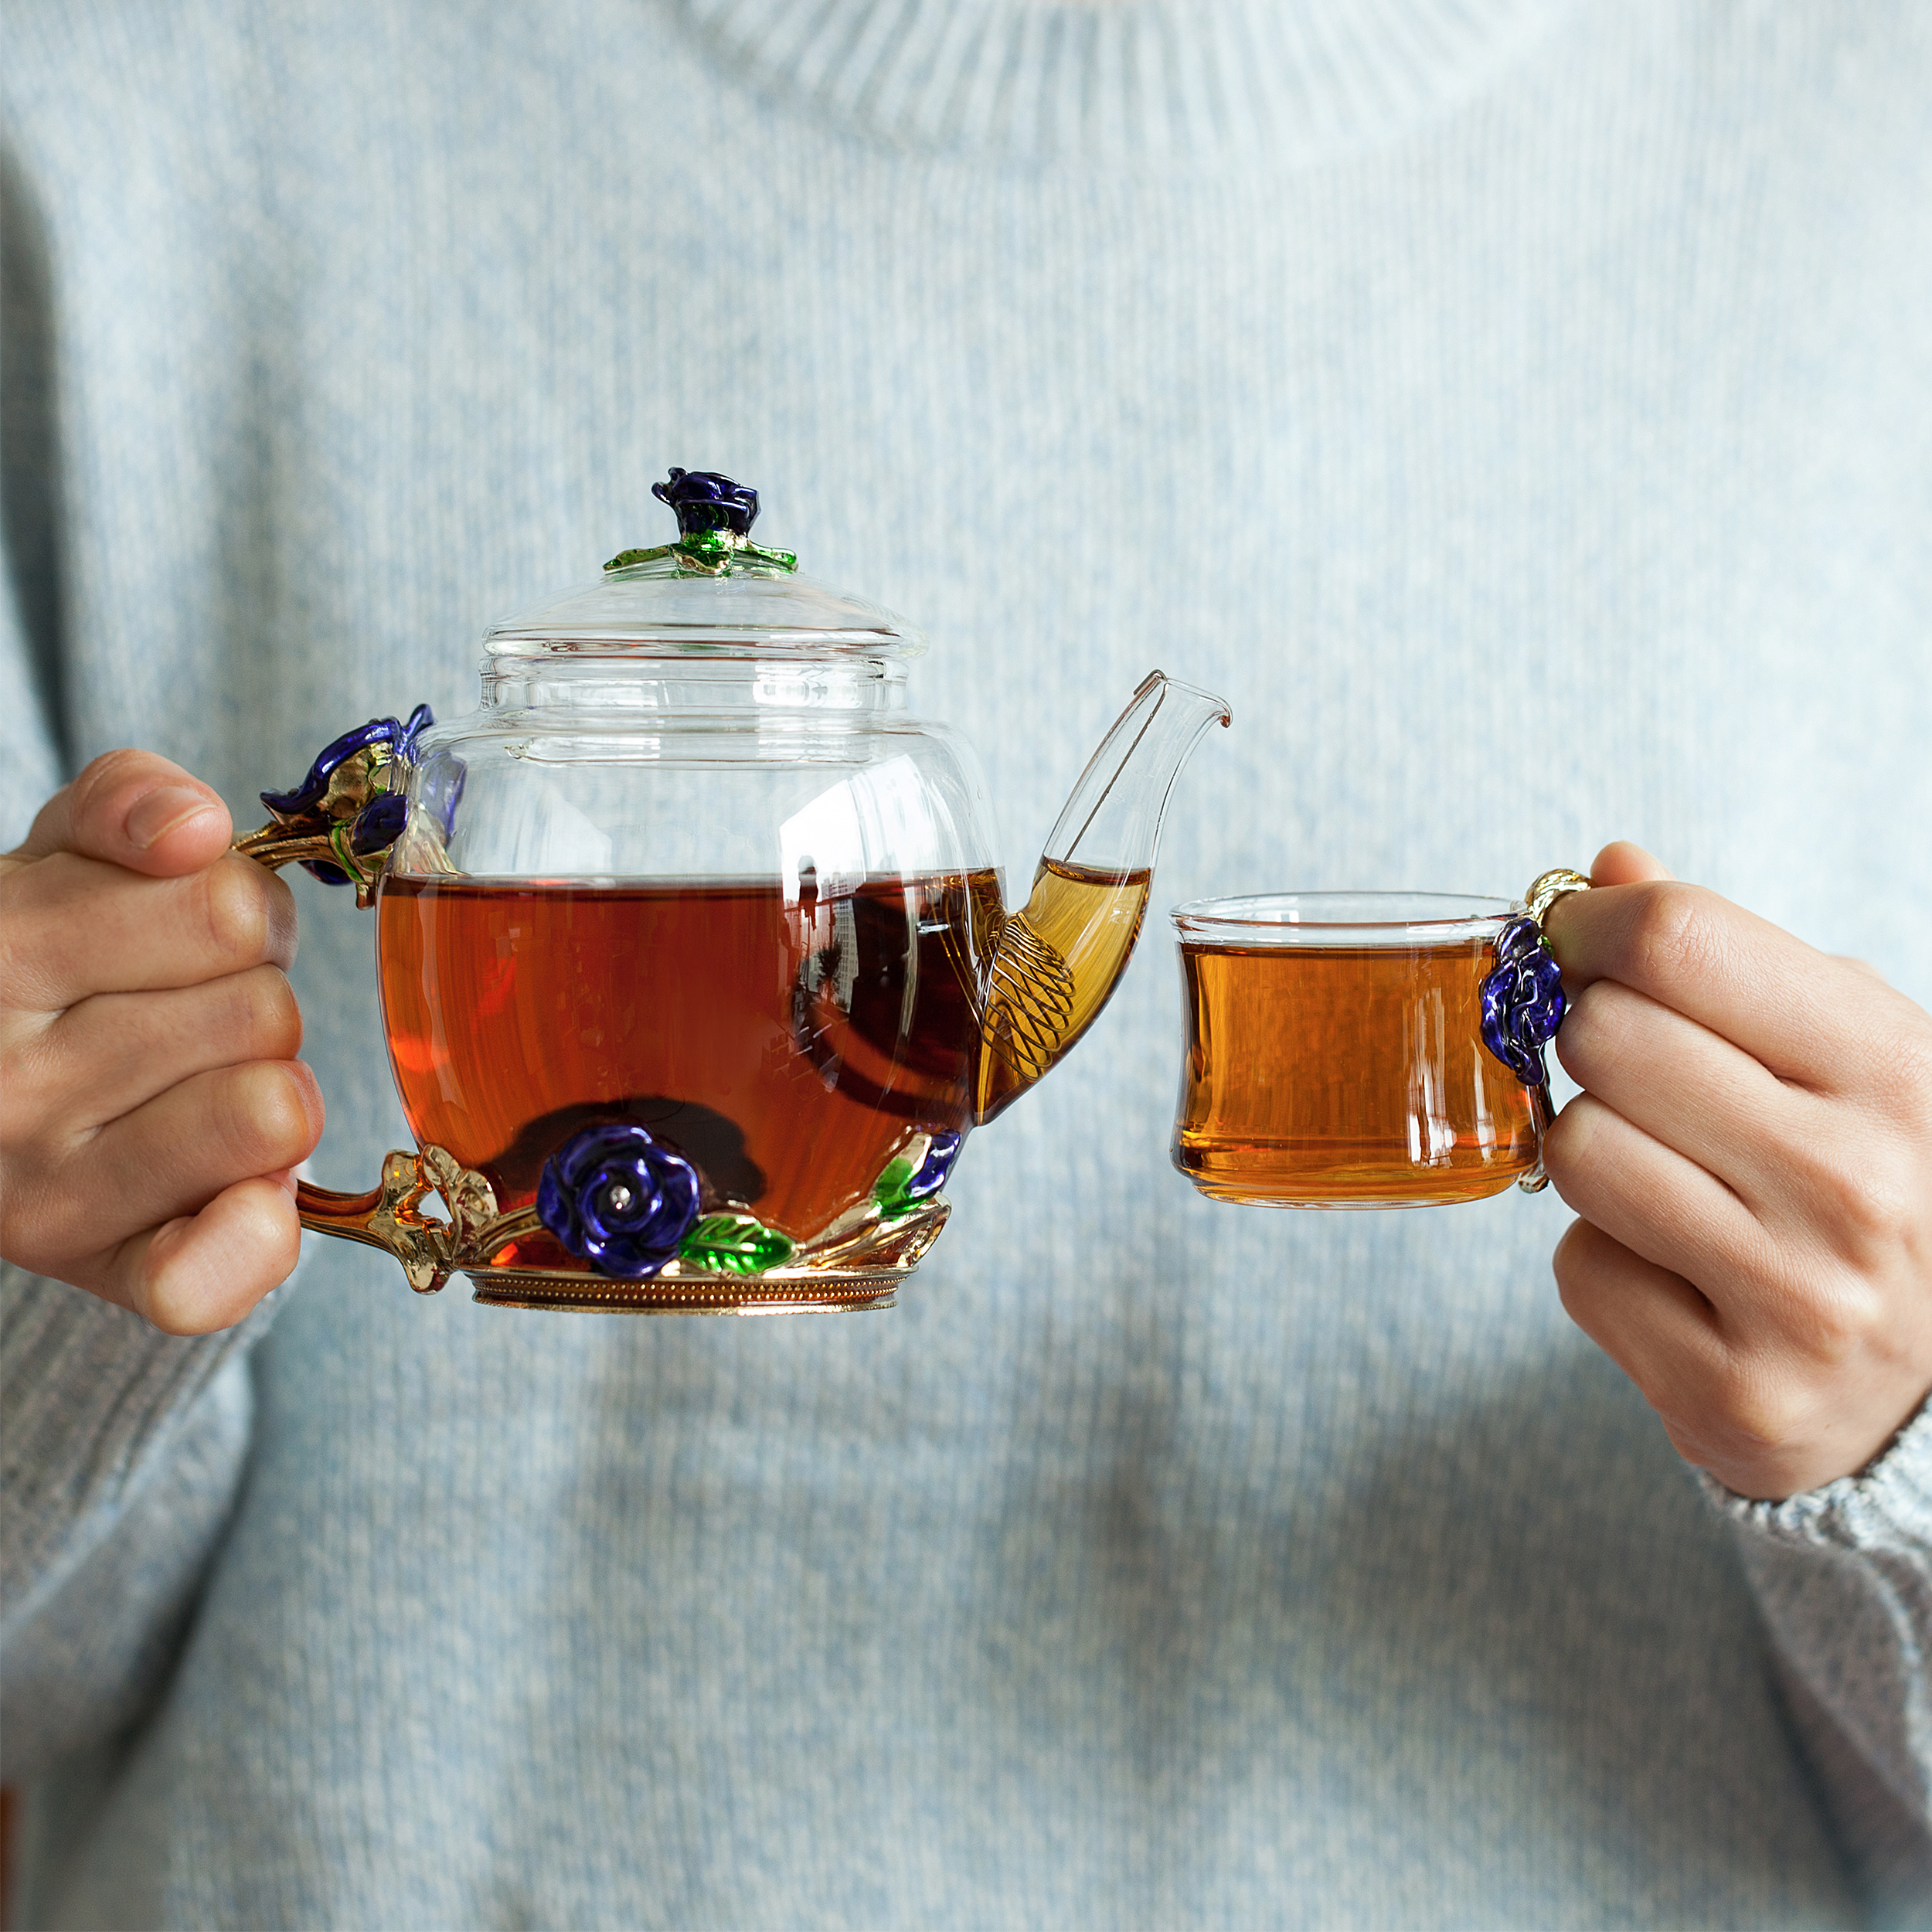 BTaT- Small Glass Tea Set, 2 Fancy Cups, Tea Pot Glass, Tea Kettle Set, Tea Pot